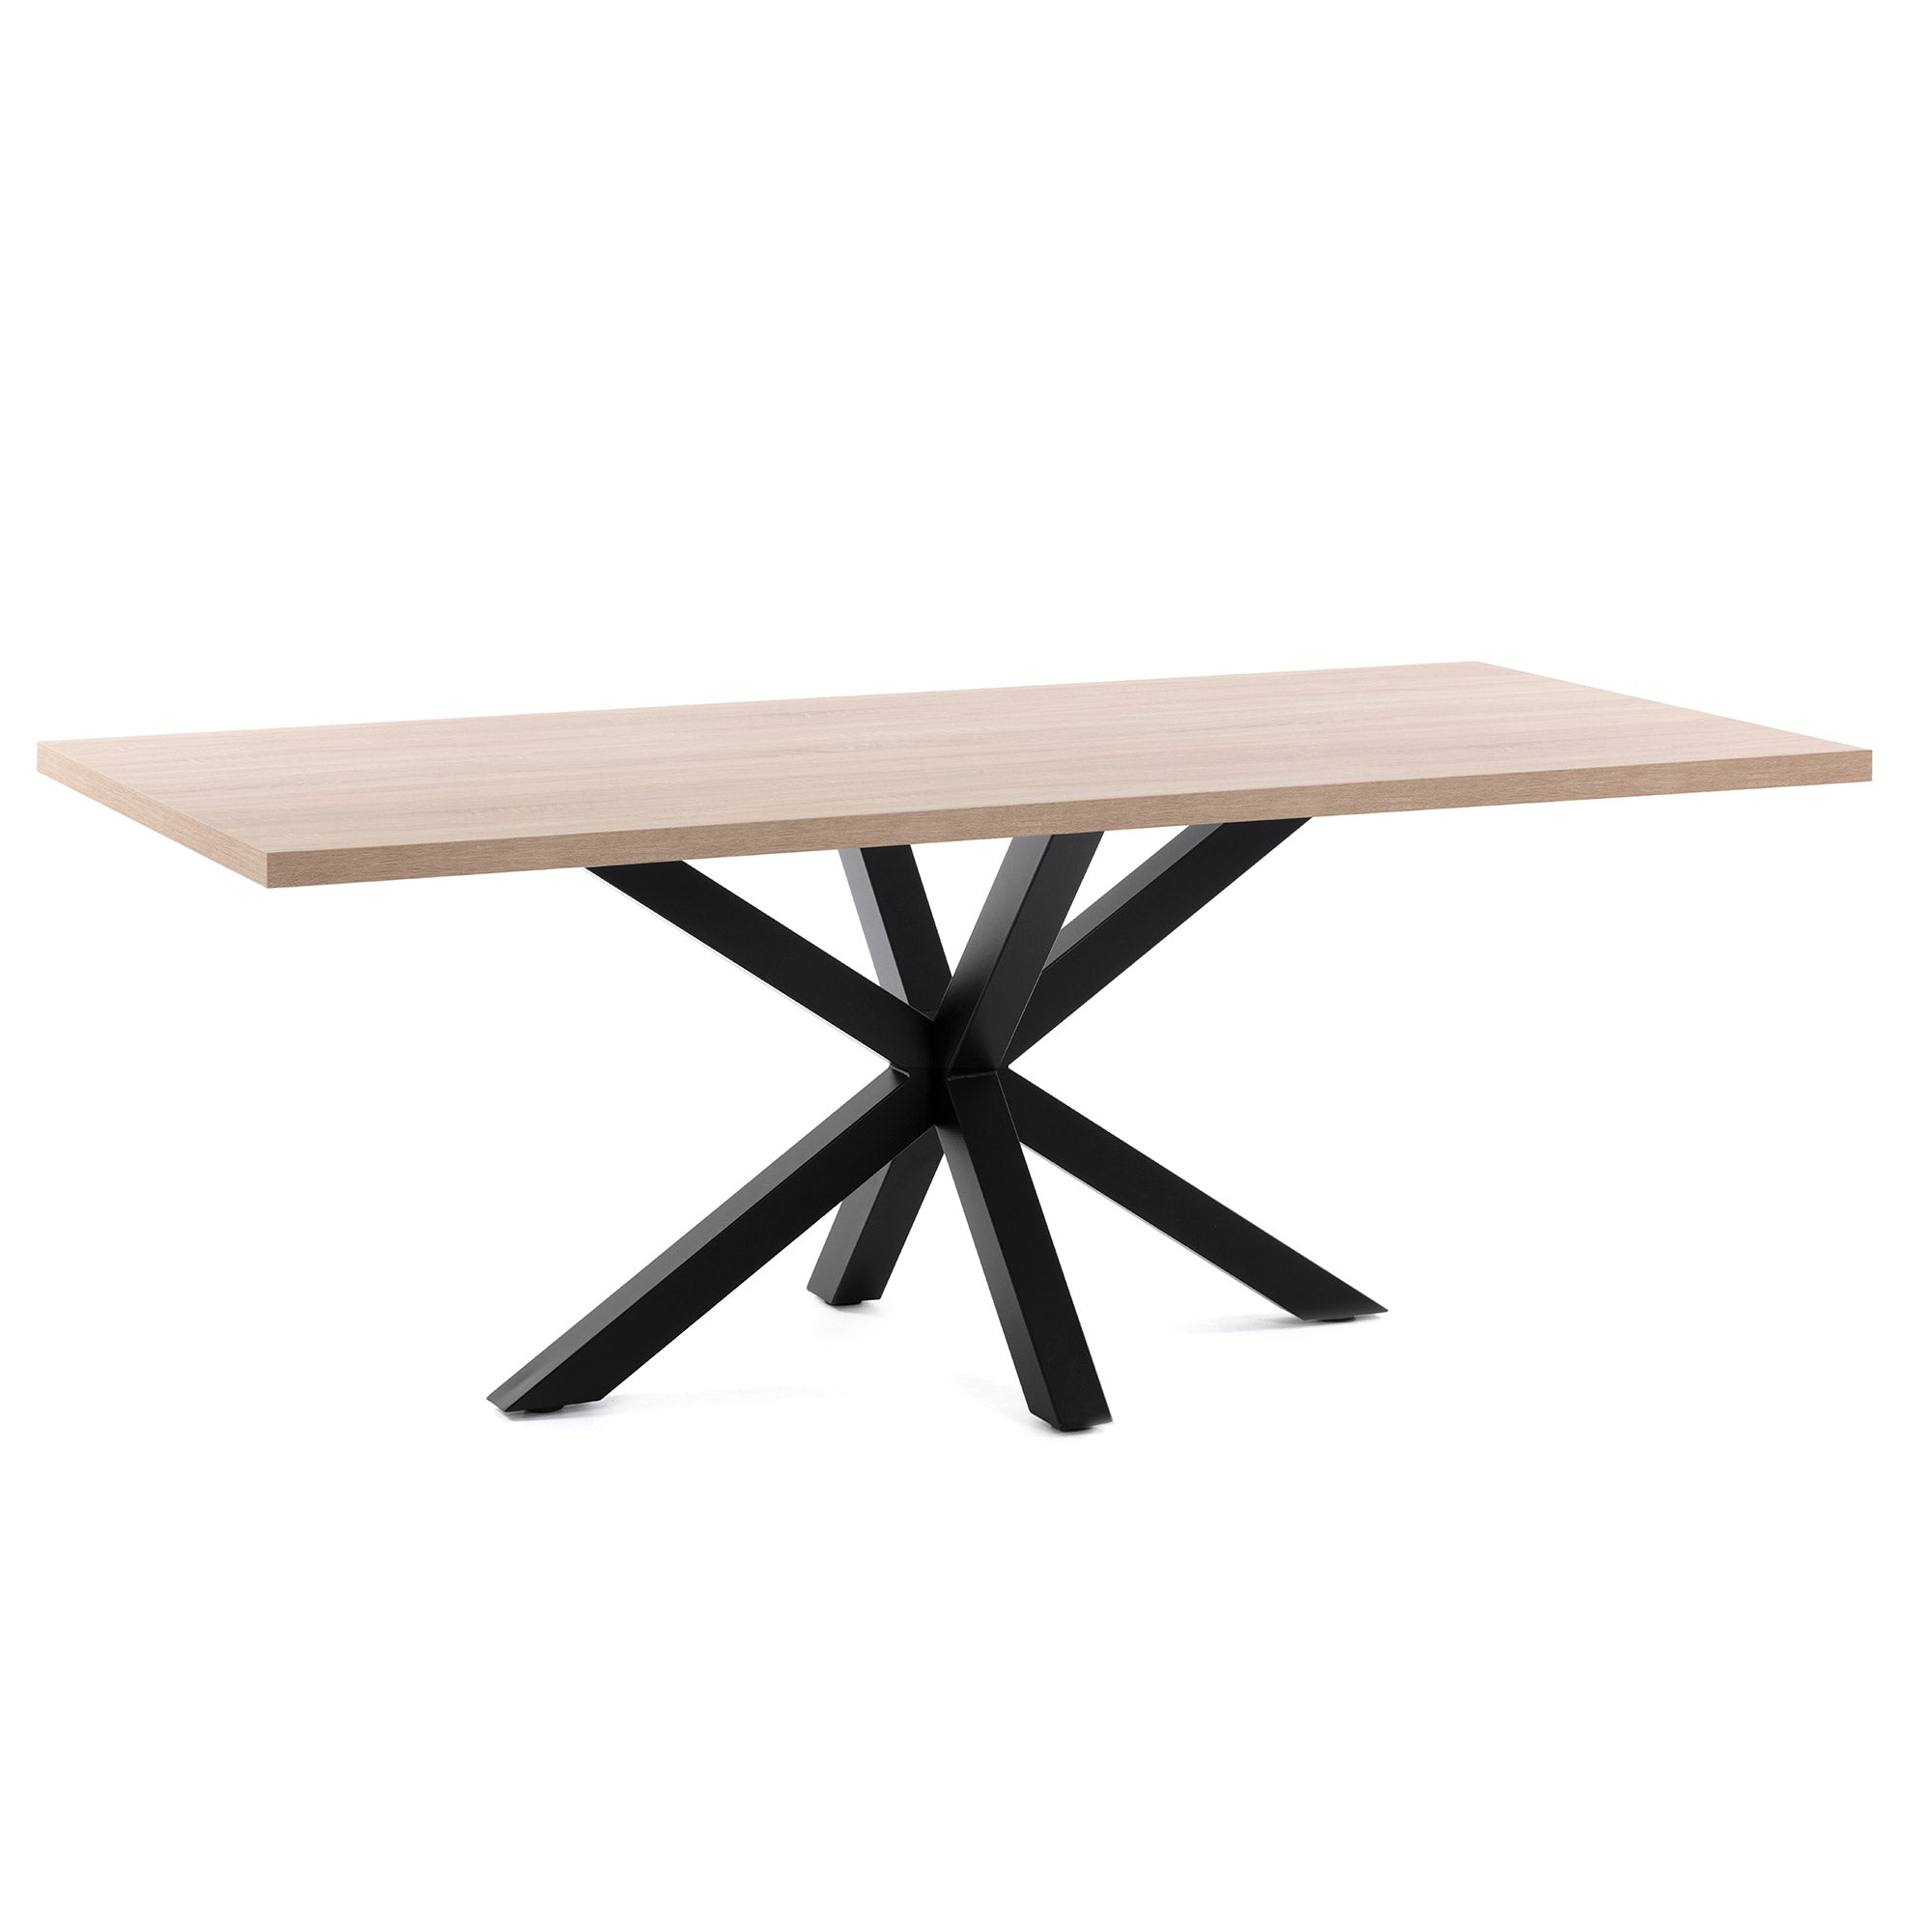 Argo table 160 cm natural melamine black legs